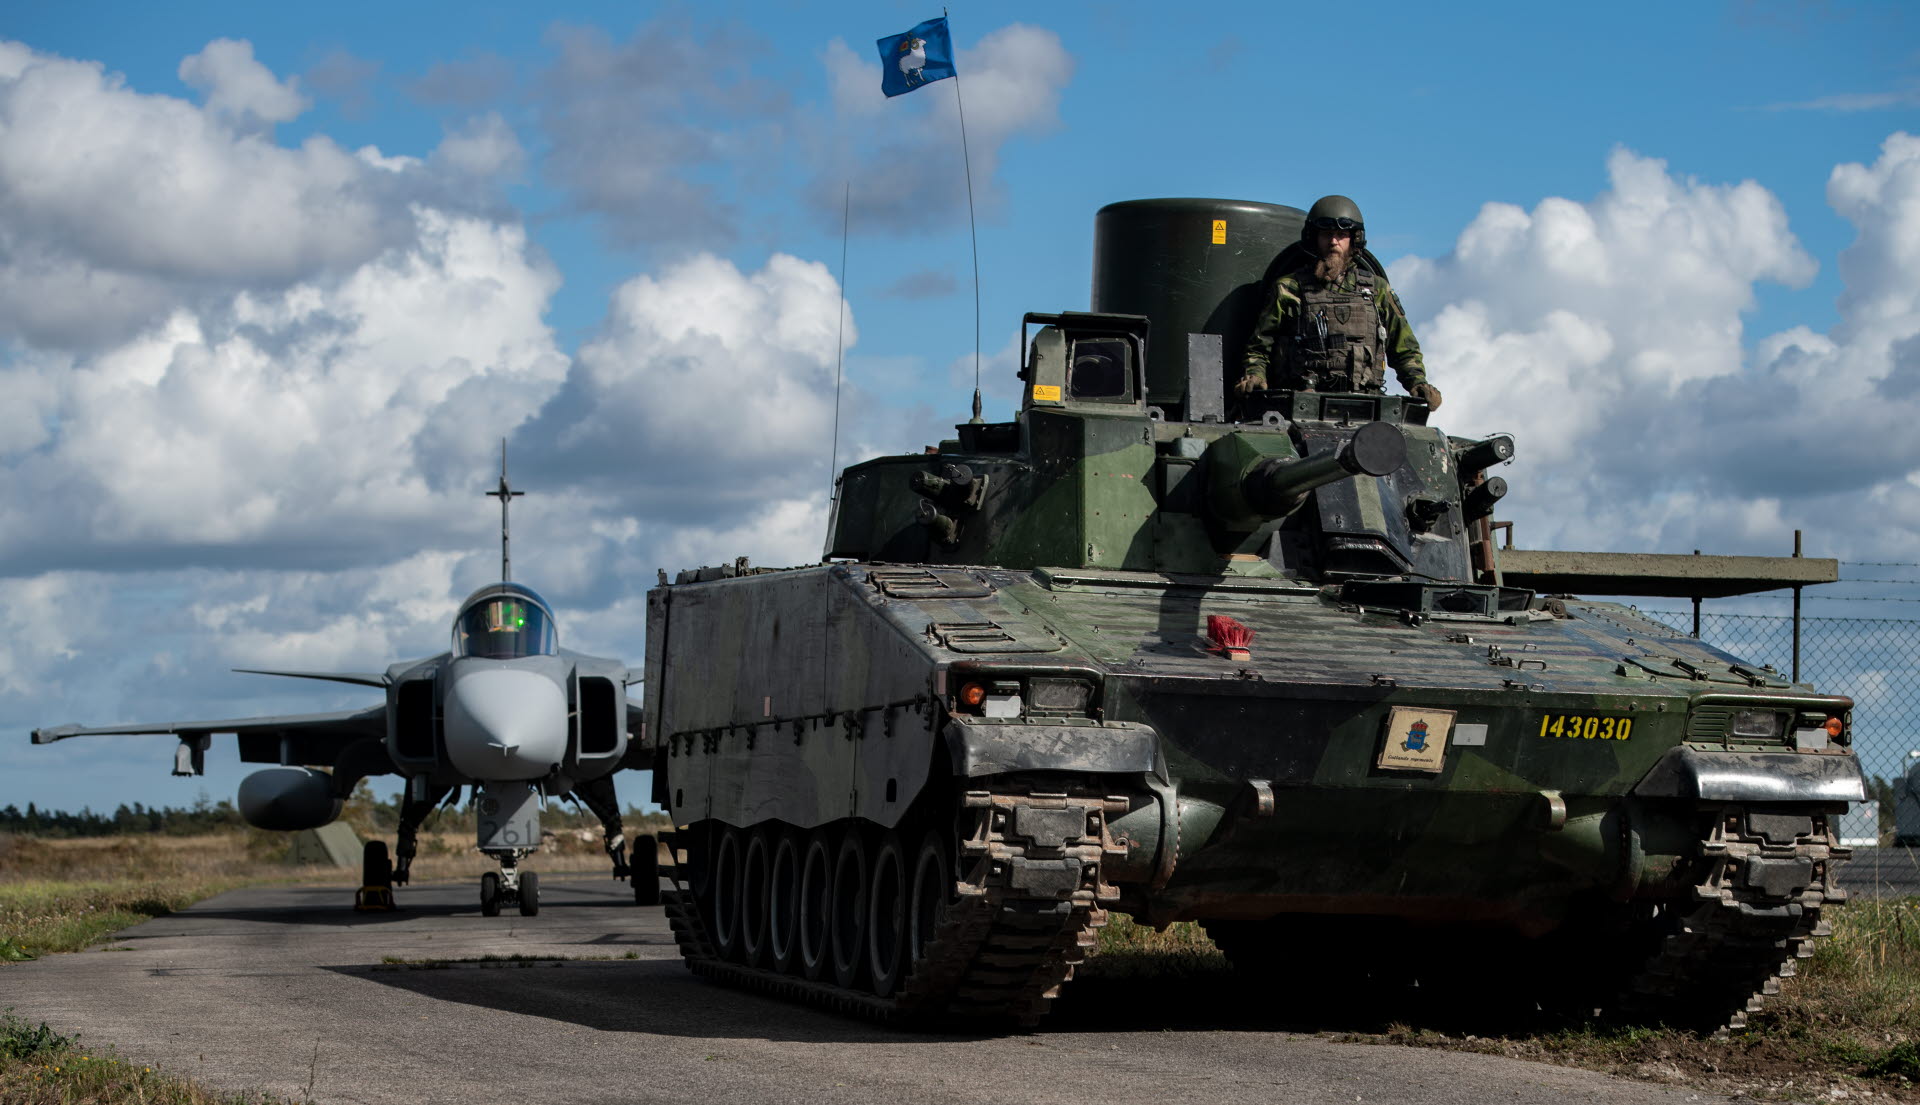 Swedish main battle tank “Stridsvagn 122” on site in Ukraine